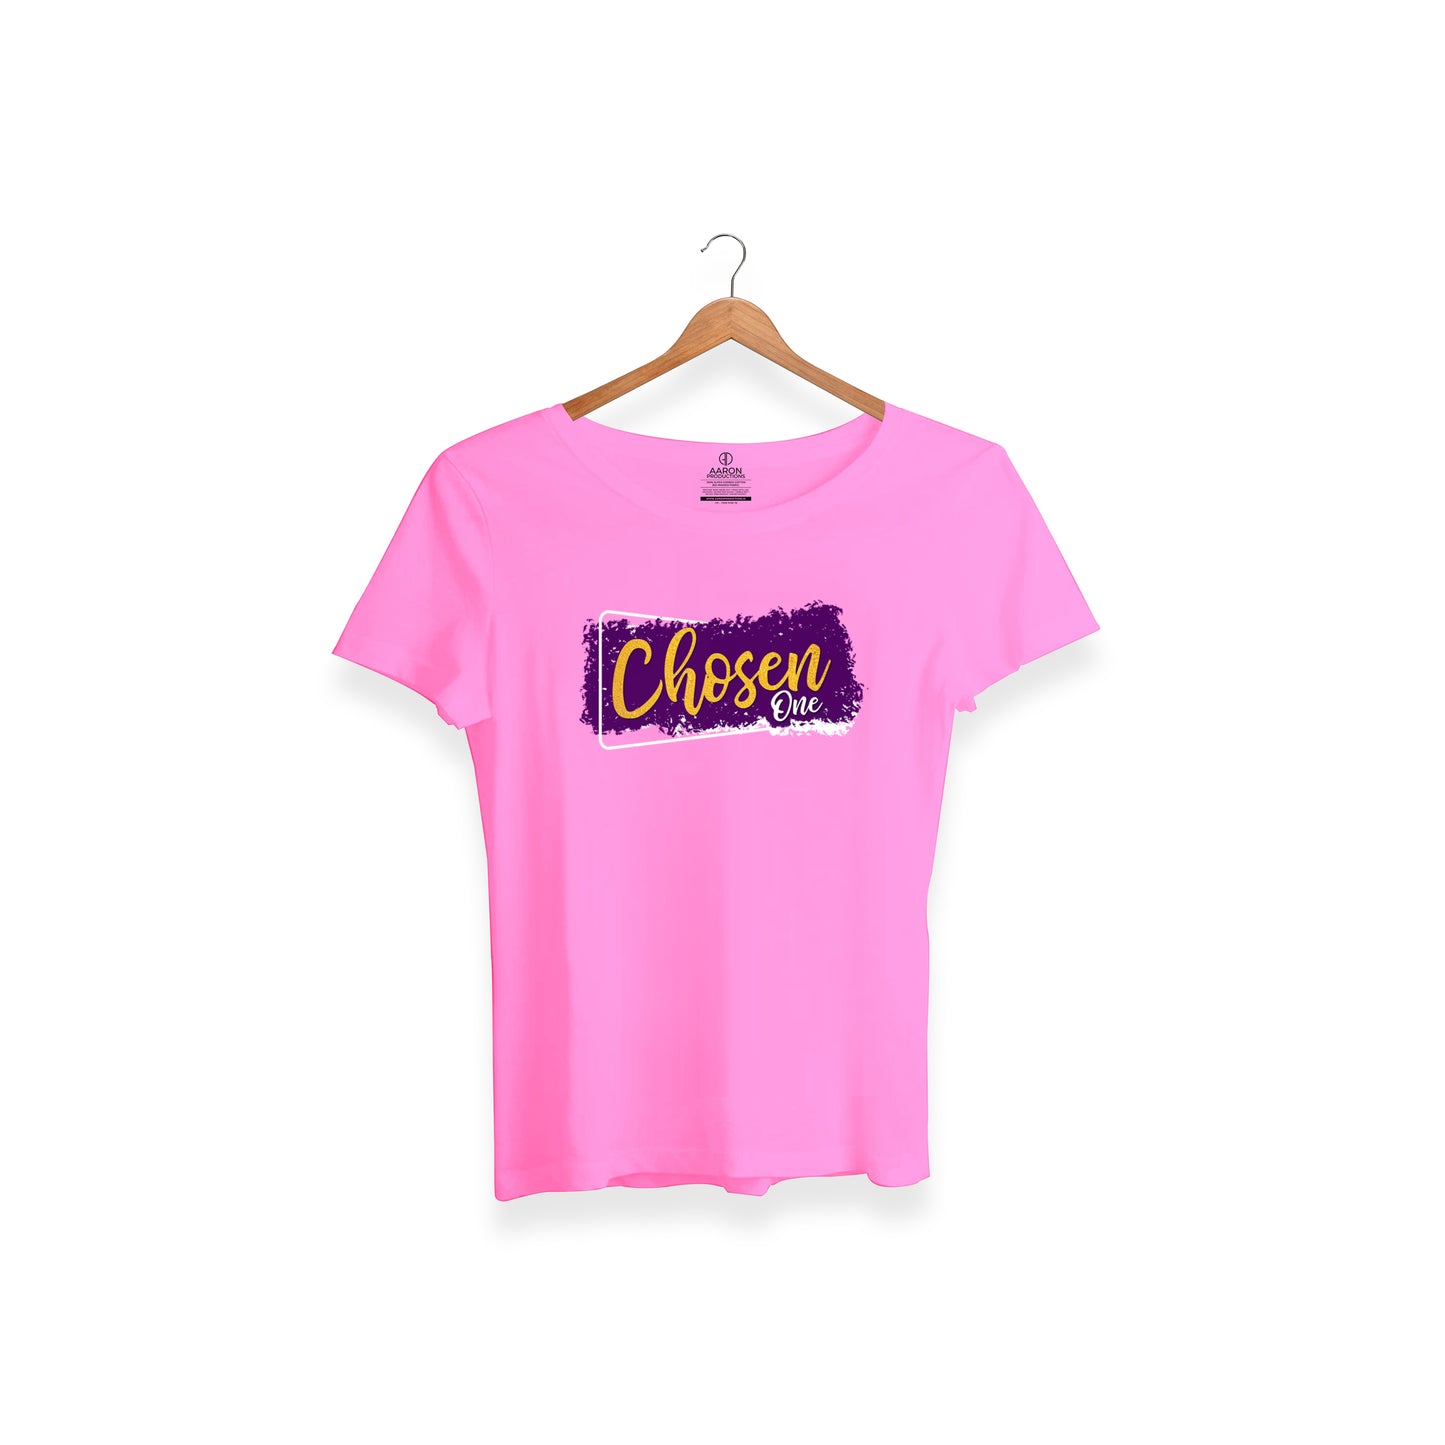 Chosen One - Girls T-shirts